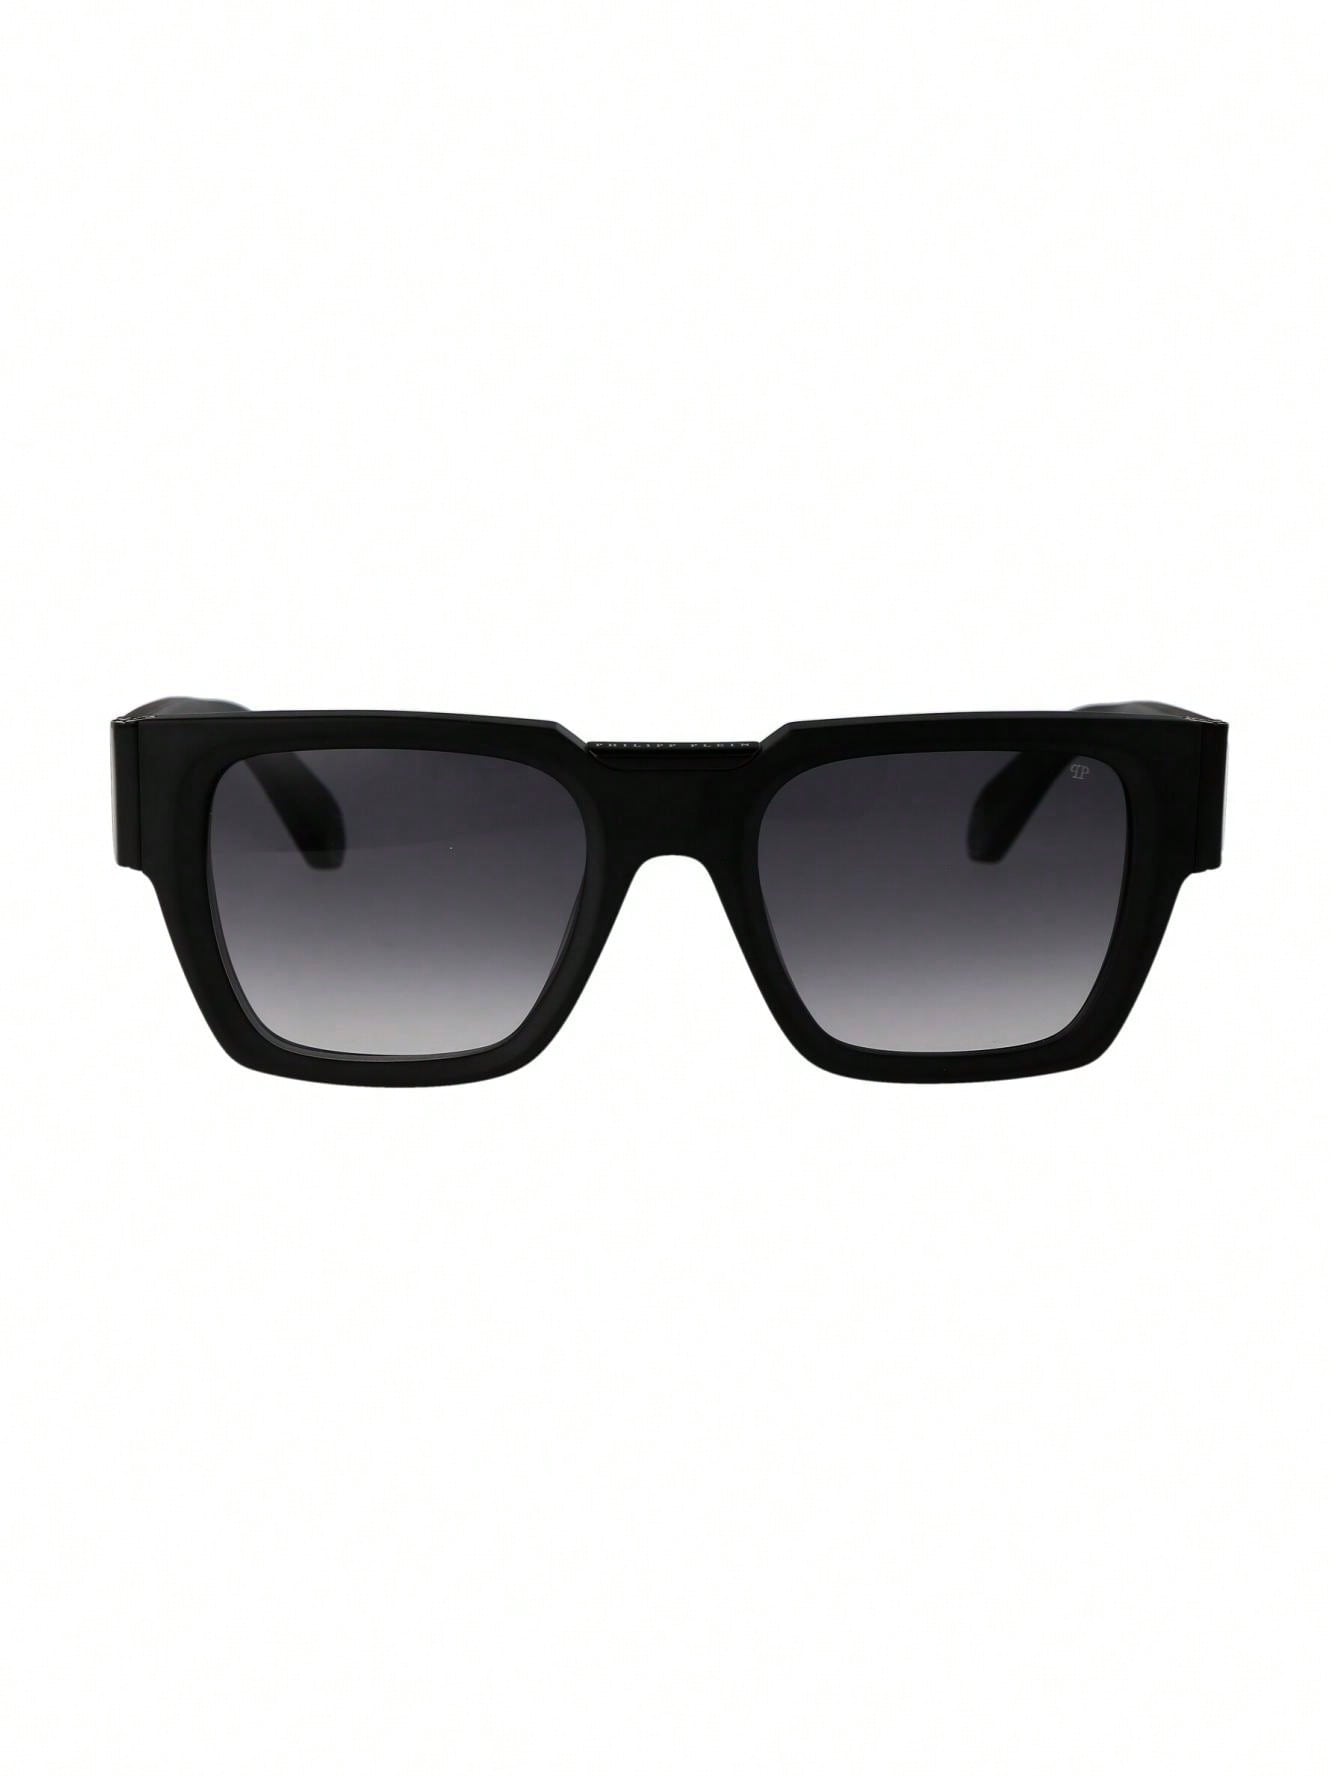 Мужские солнцезащитные очки Philipp Plein DECOR SPP095M0703, многоцветный солнцезащитные очки philipp plein 025s 700